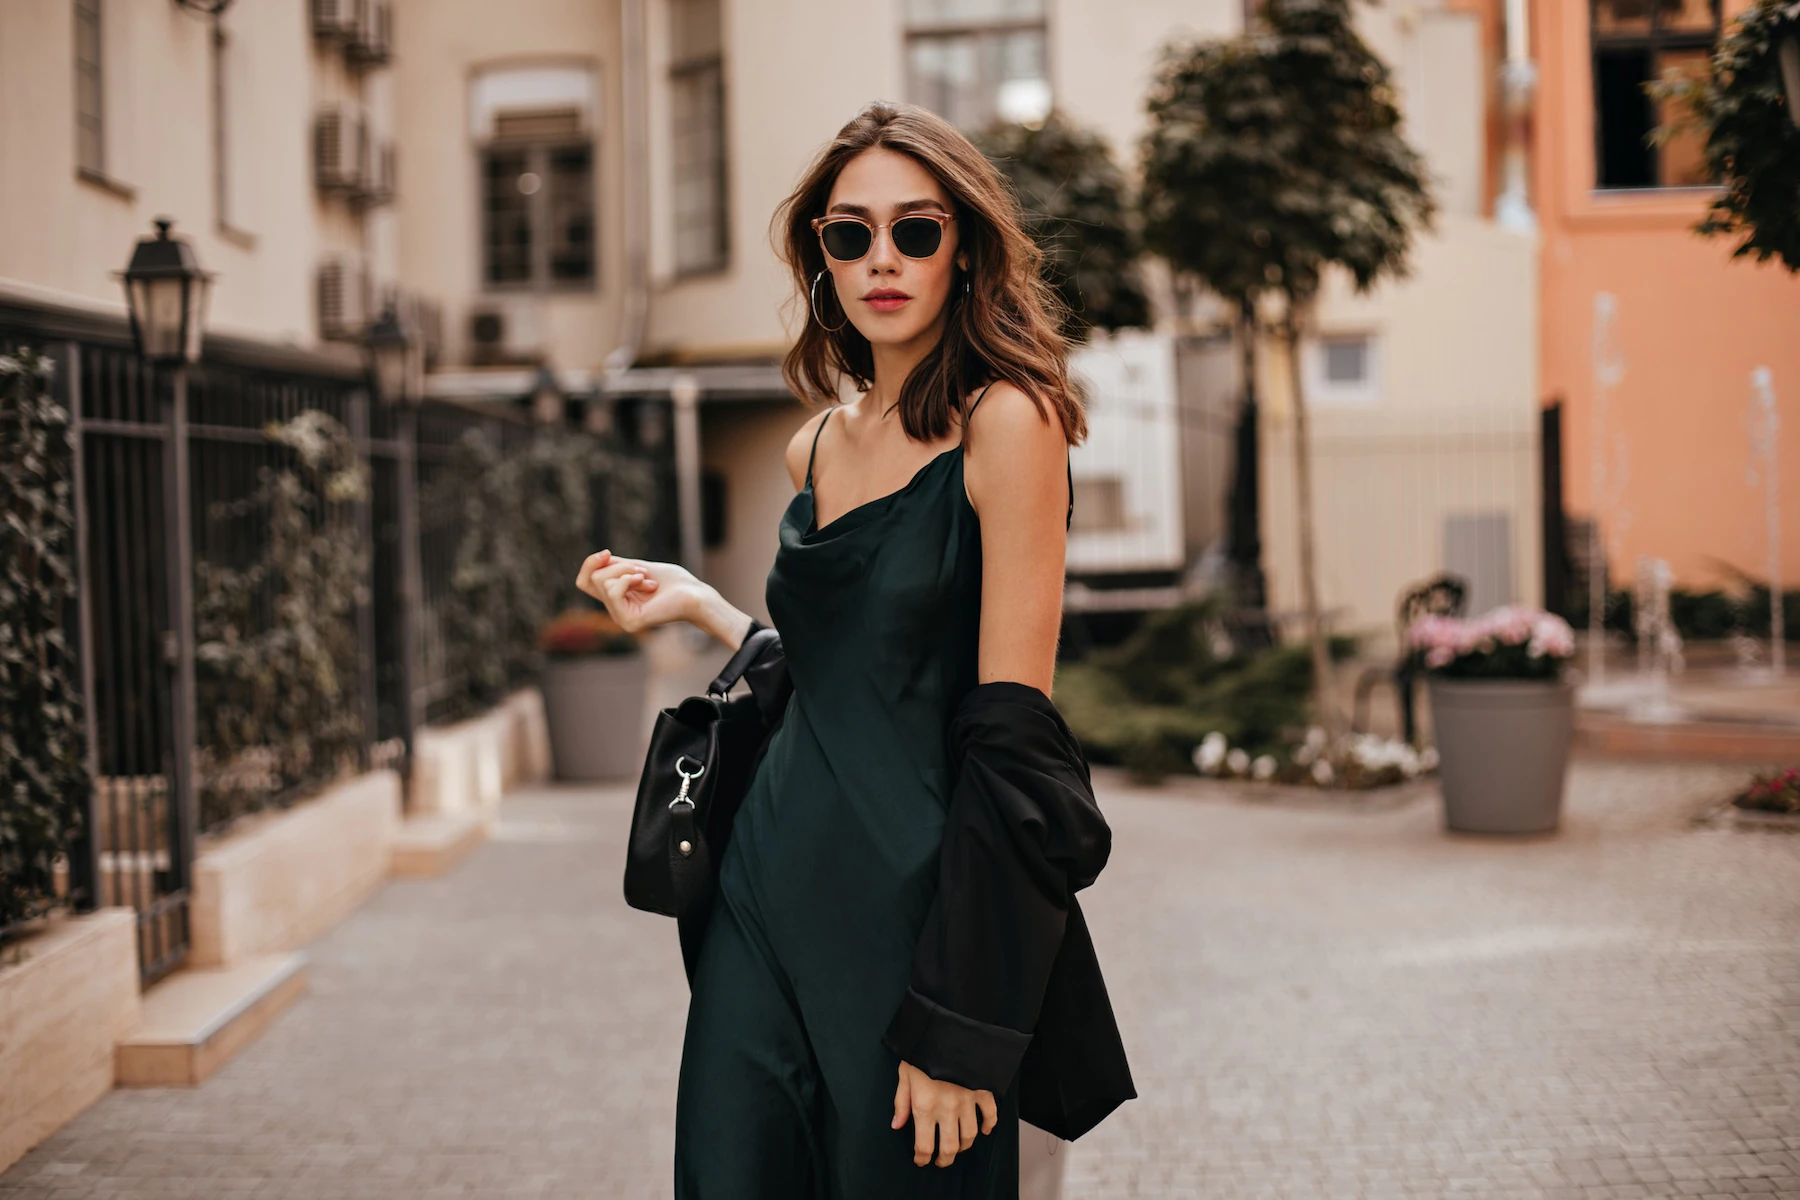 fashionable pale brunette long green dress black jacket sunglasses standing street during daytime against wall light city building 197531 24468